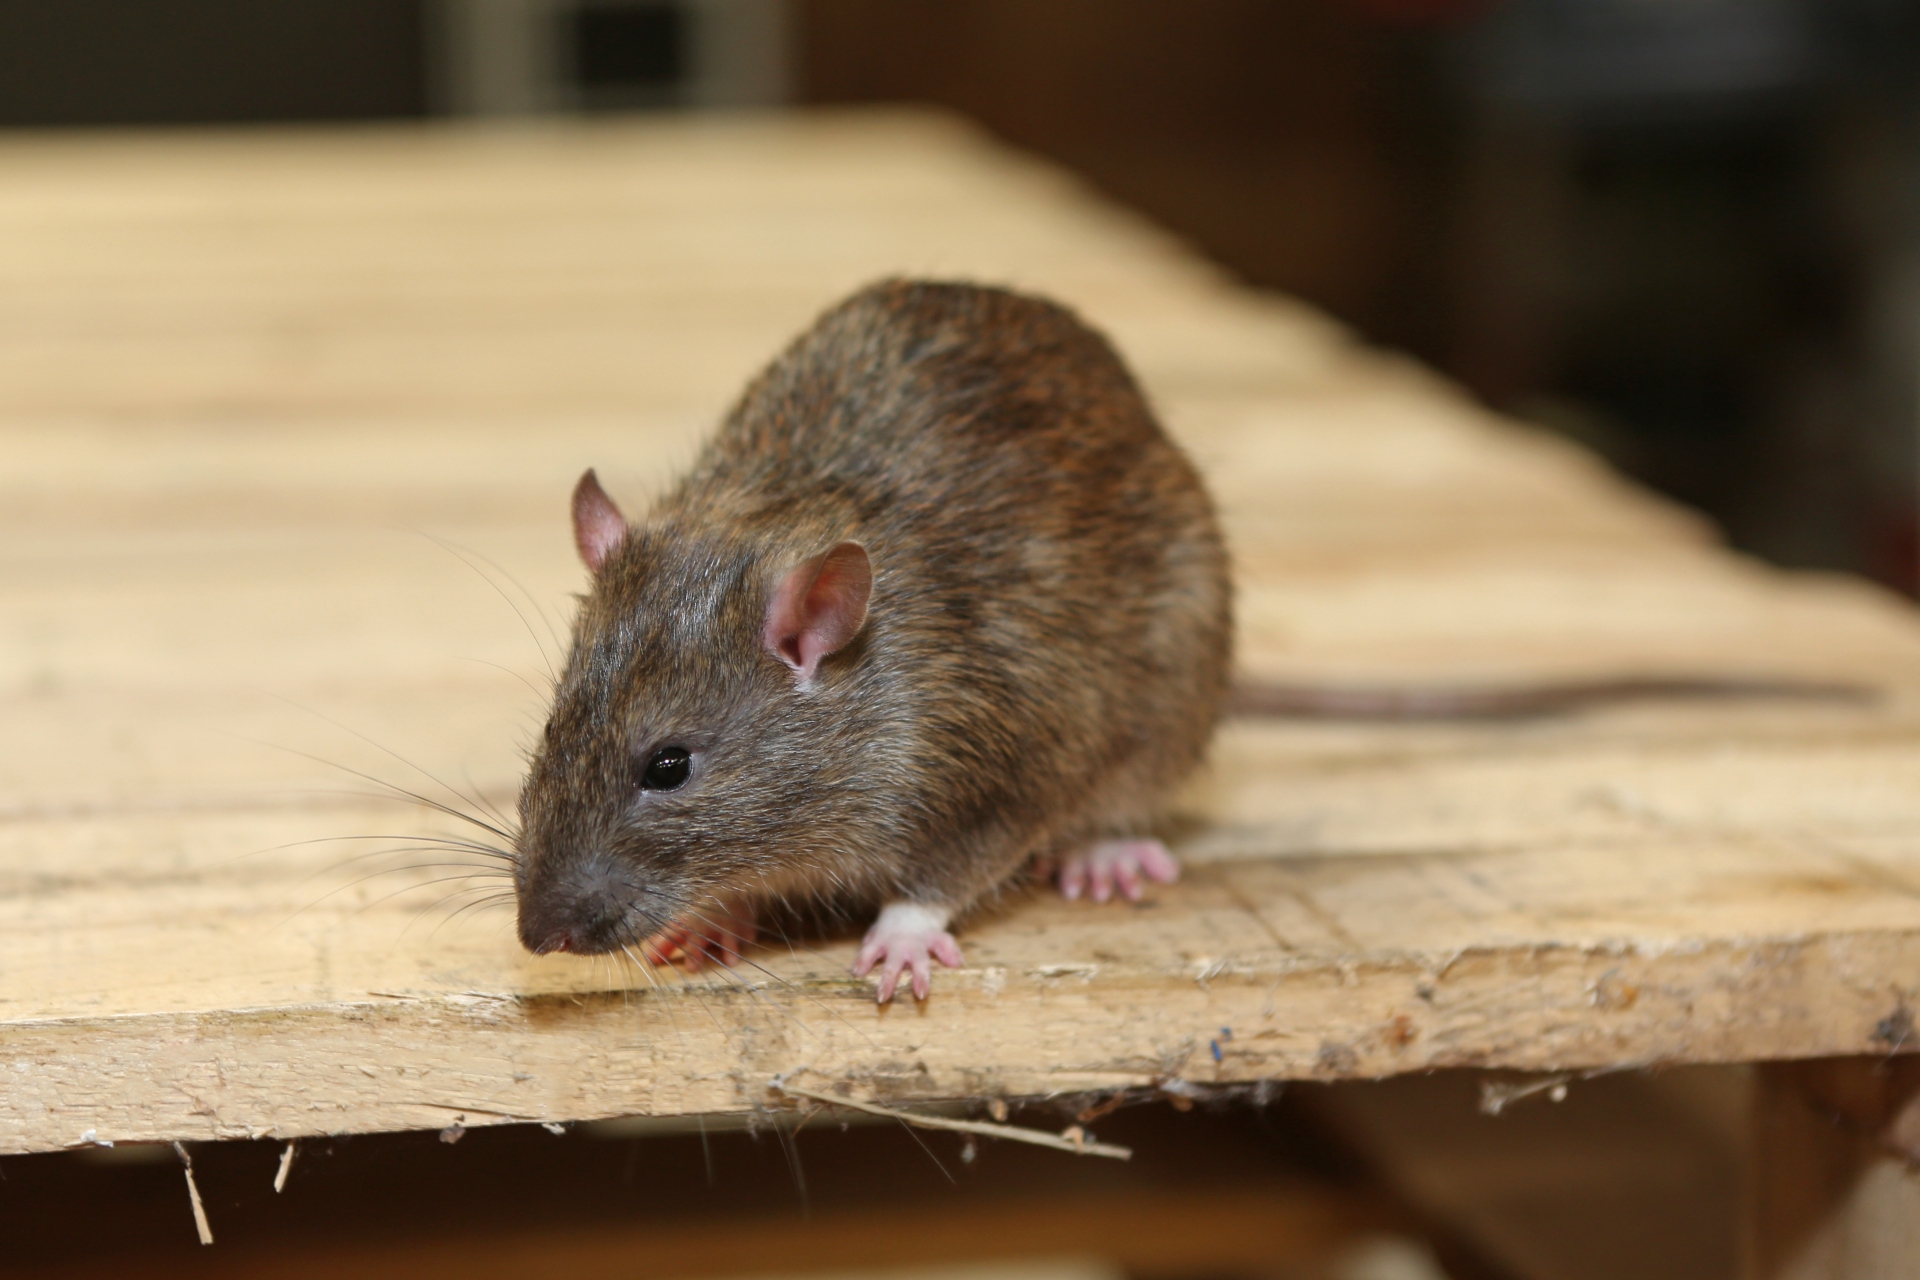 Rat extermination, Pest Control in Dartford, Crayford, DA1. Call Now 020 8166 9746